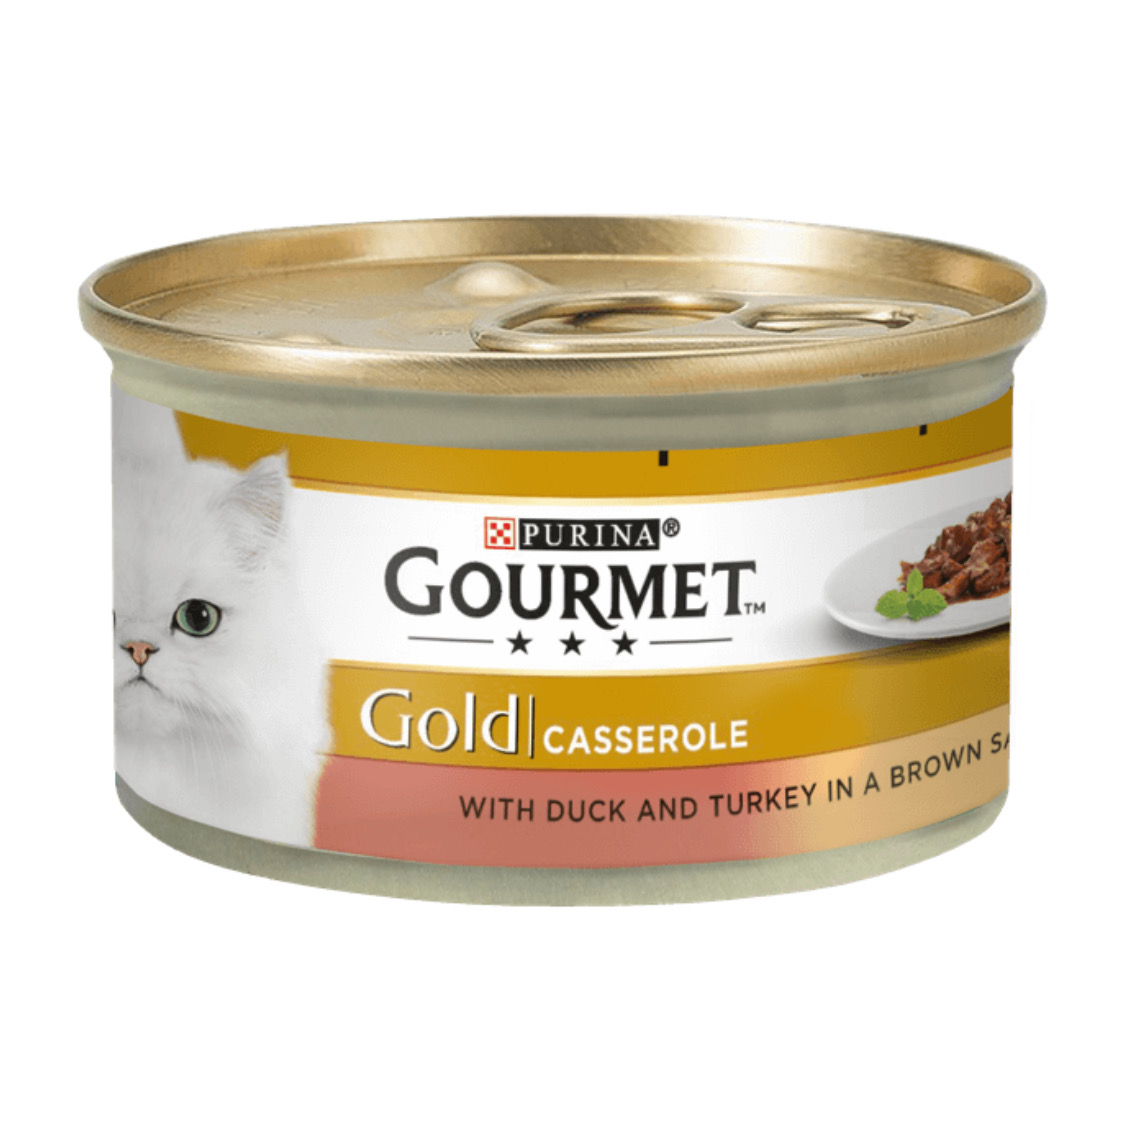 کنسرو غذای گربه پورینا مدل Gourmet وزن 85 گرم